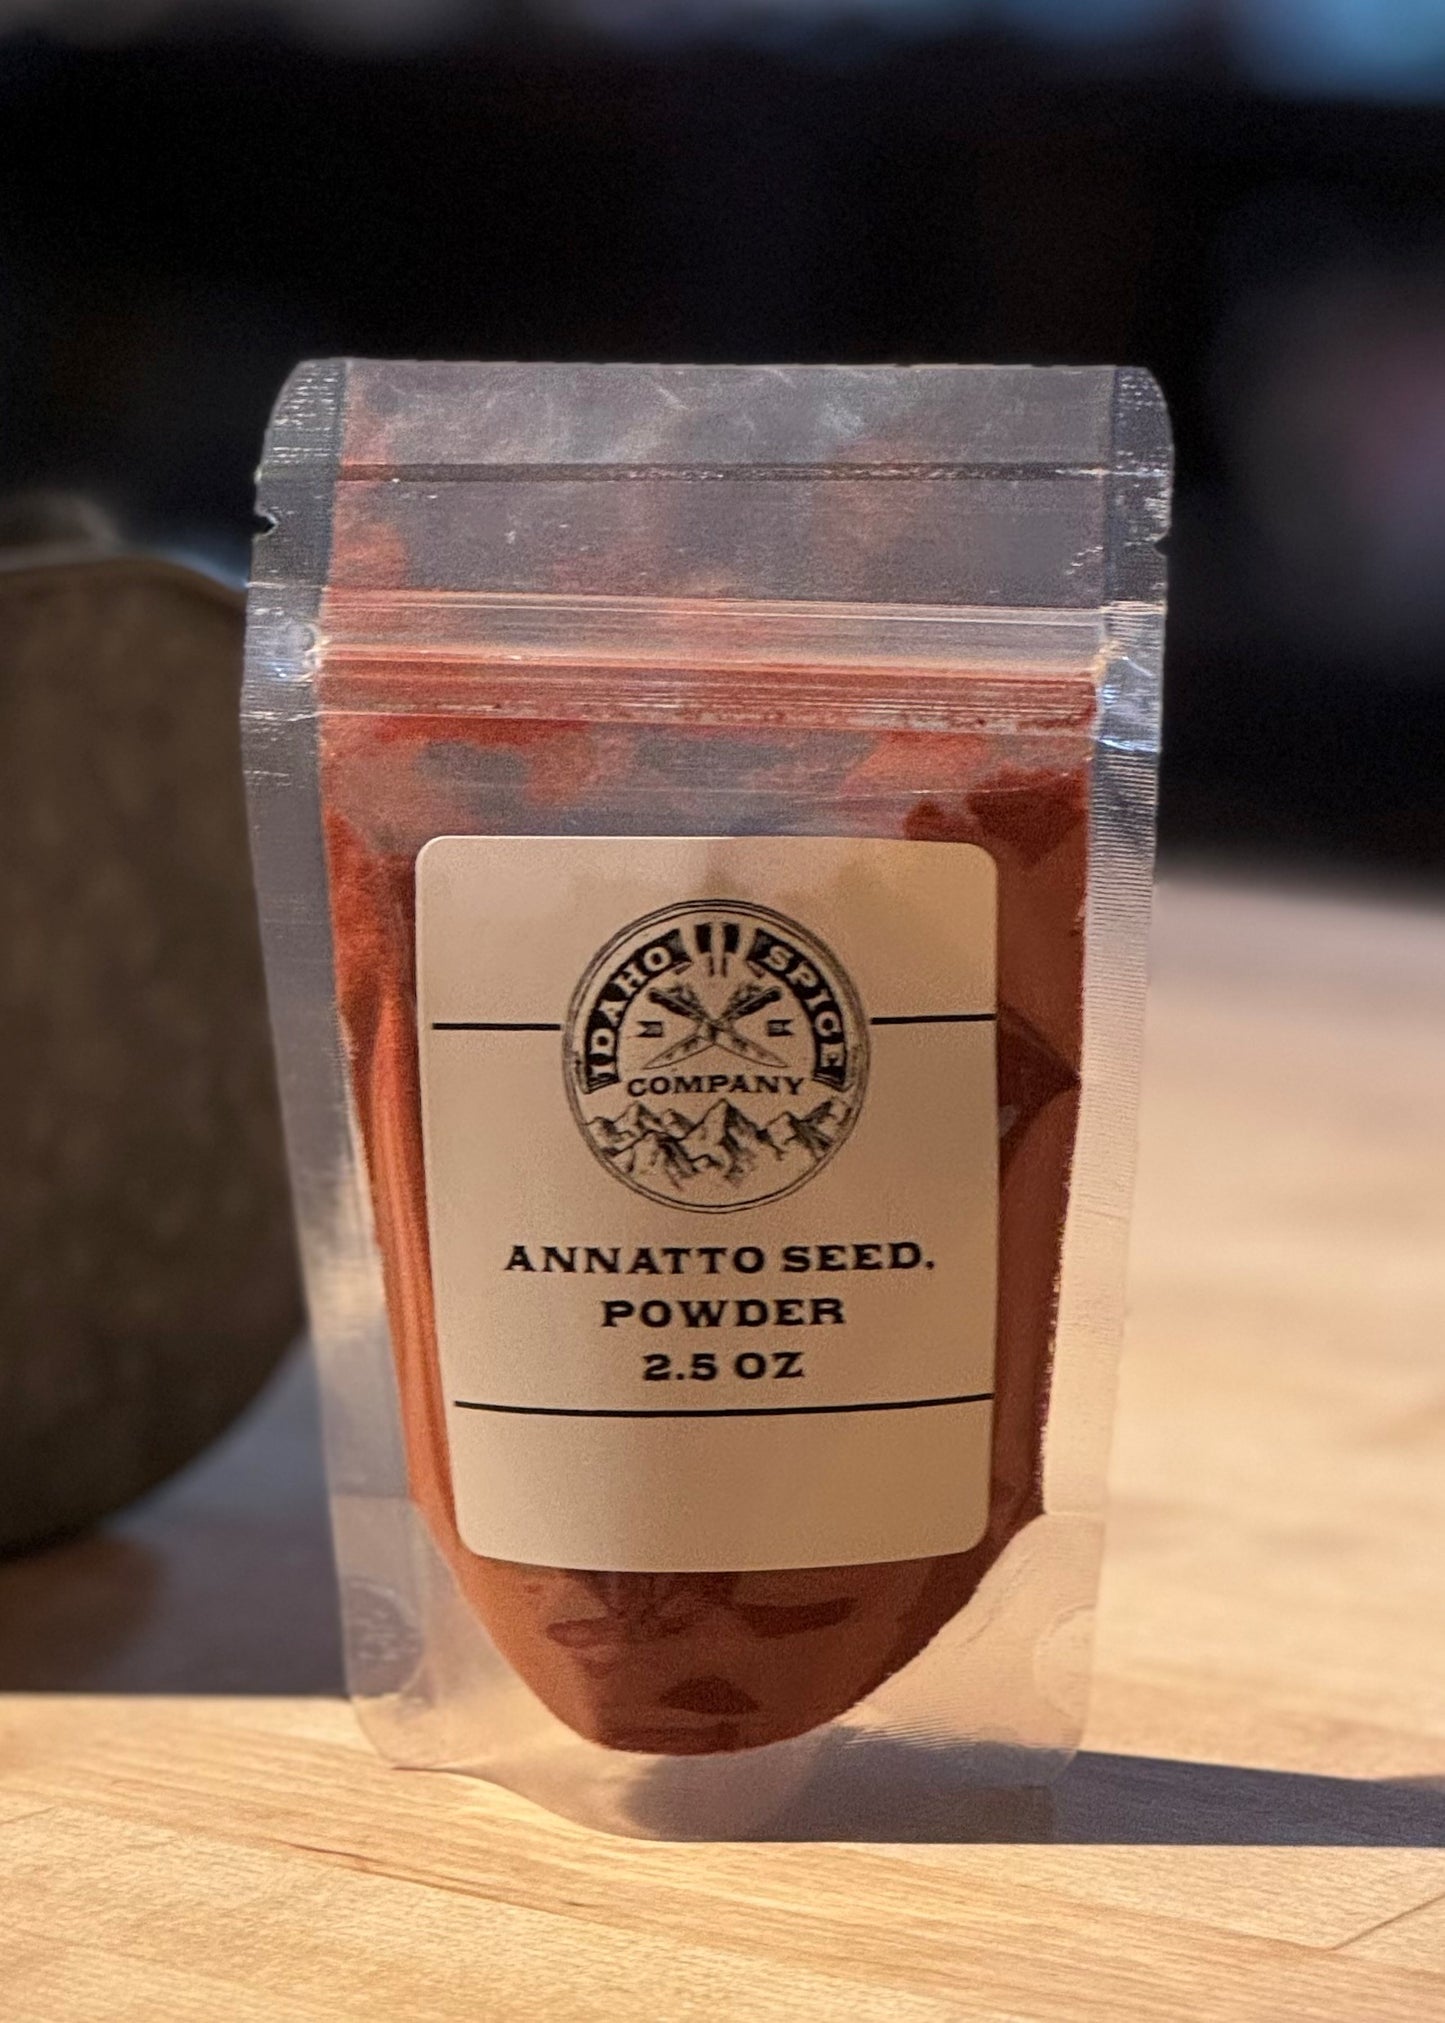 Annatto Seed, Powder - 2.5 oz Bag